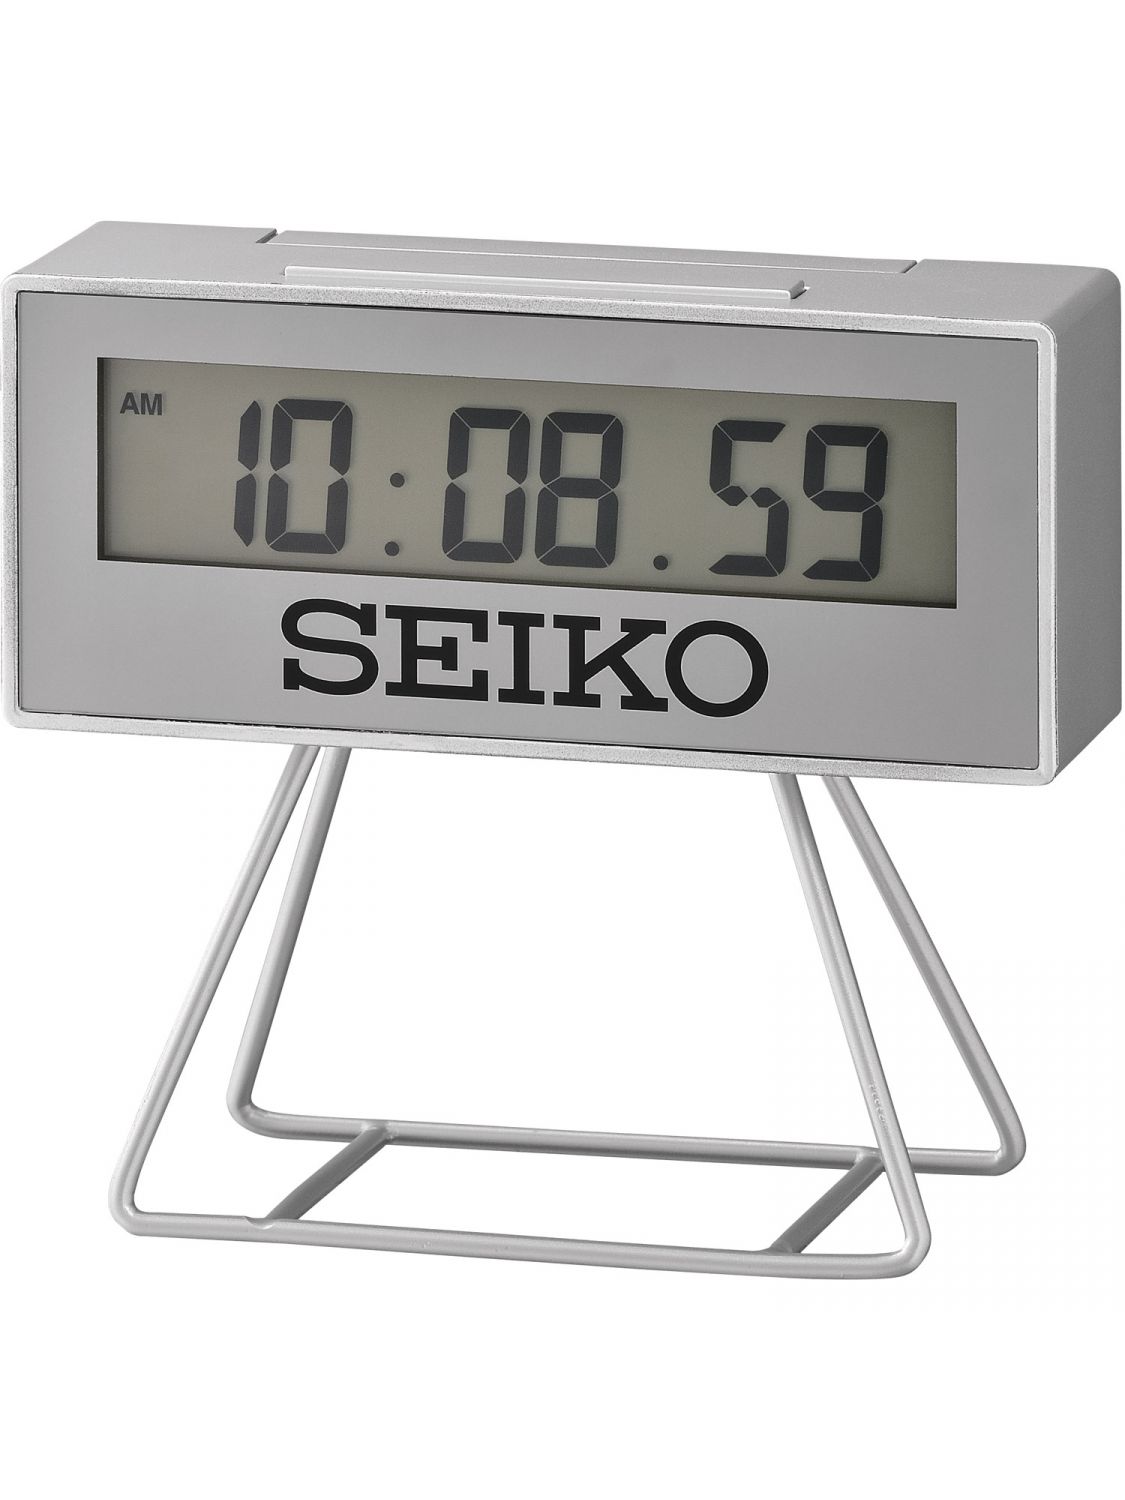 SEIKO QHL087S Alarm Clock Sport Timer Silver Tone • uhrcenter